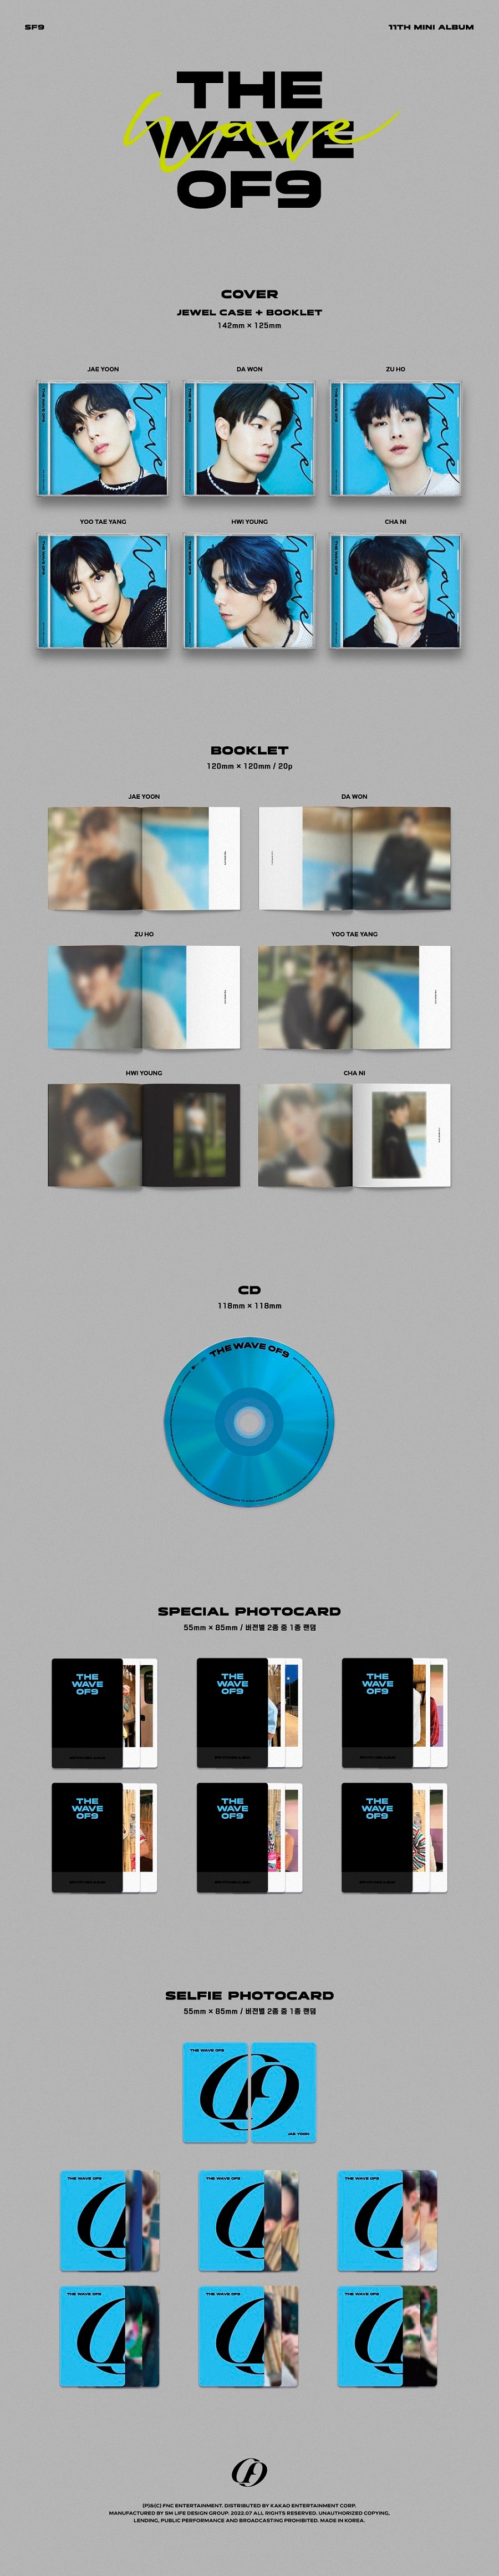 SF9 Mini Album Vol. 11 - THE WAVE OF9 (Jewel Case Version) (Limited Edition) (Random Version)